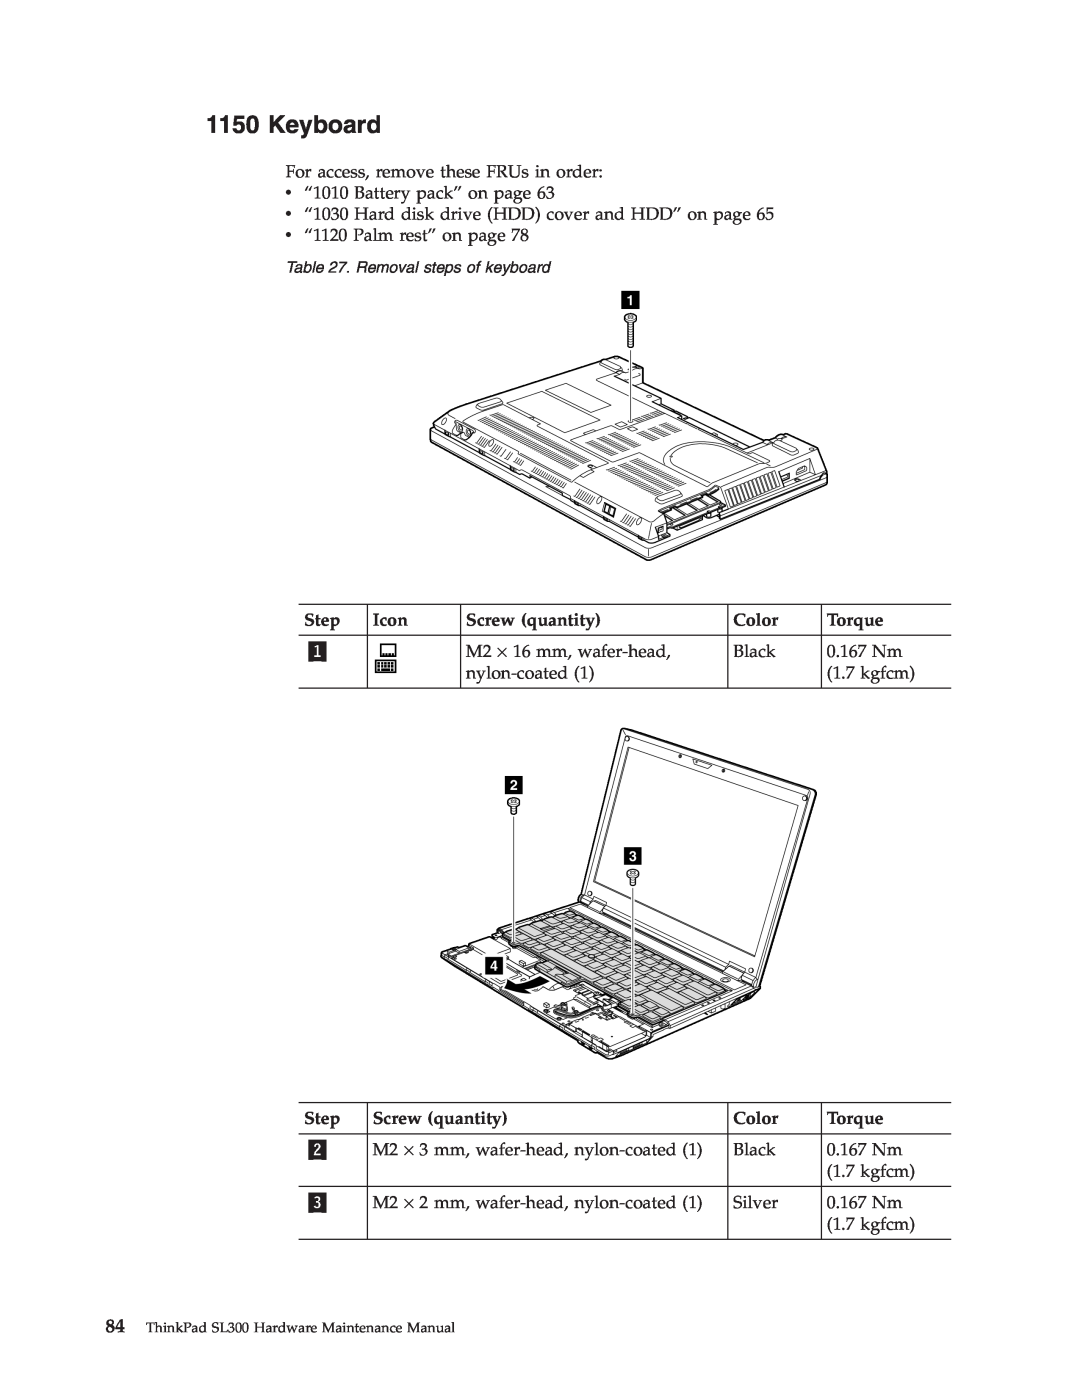 Lenovo SL300 manual Keyboard, Step, Icon, Screw quantity, Color, Torque 